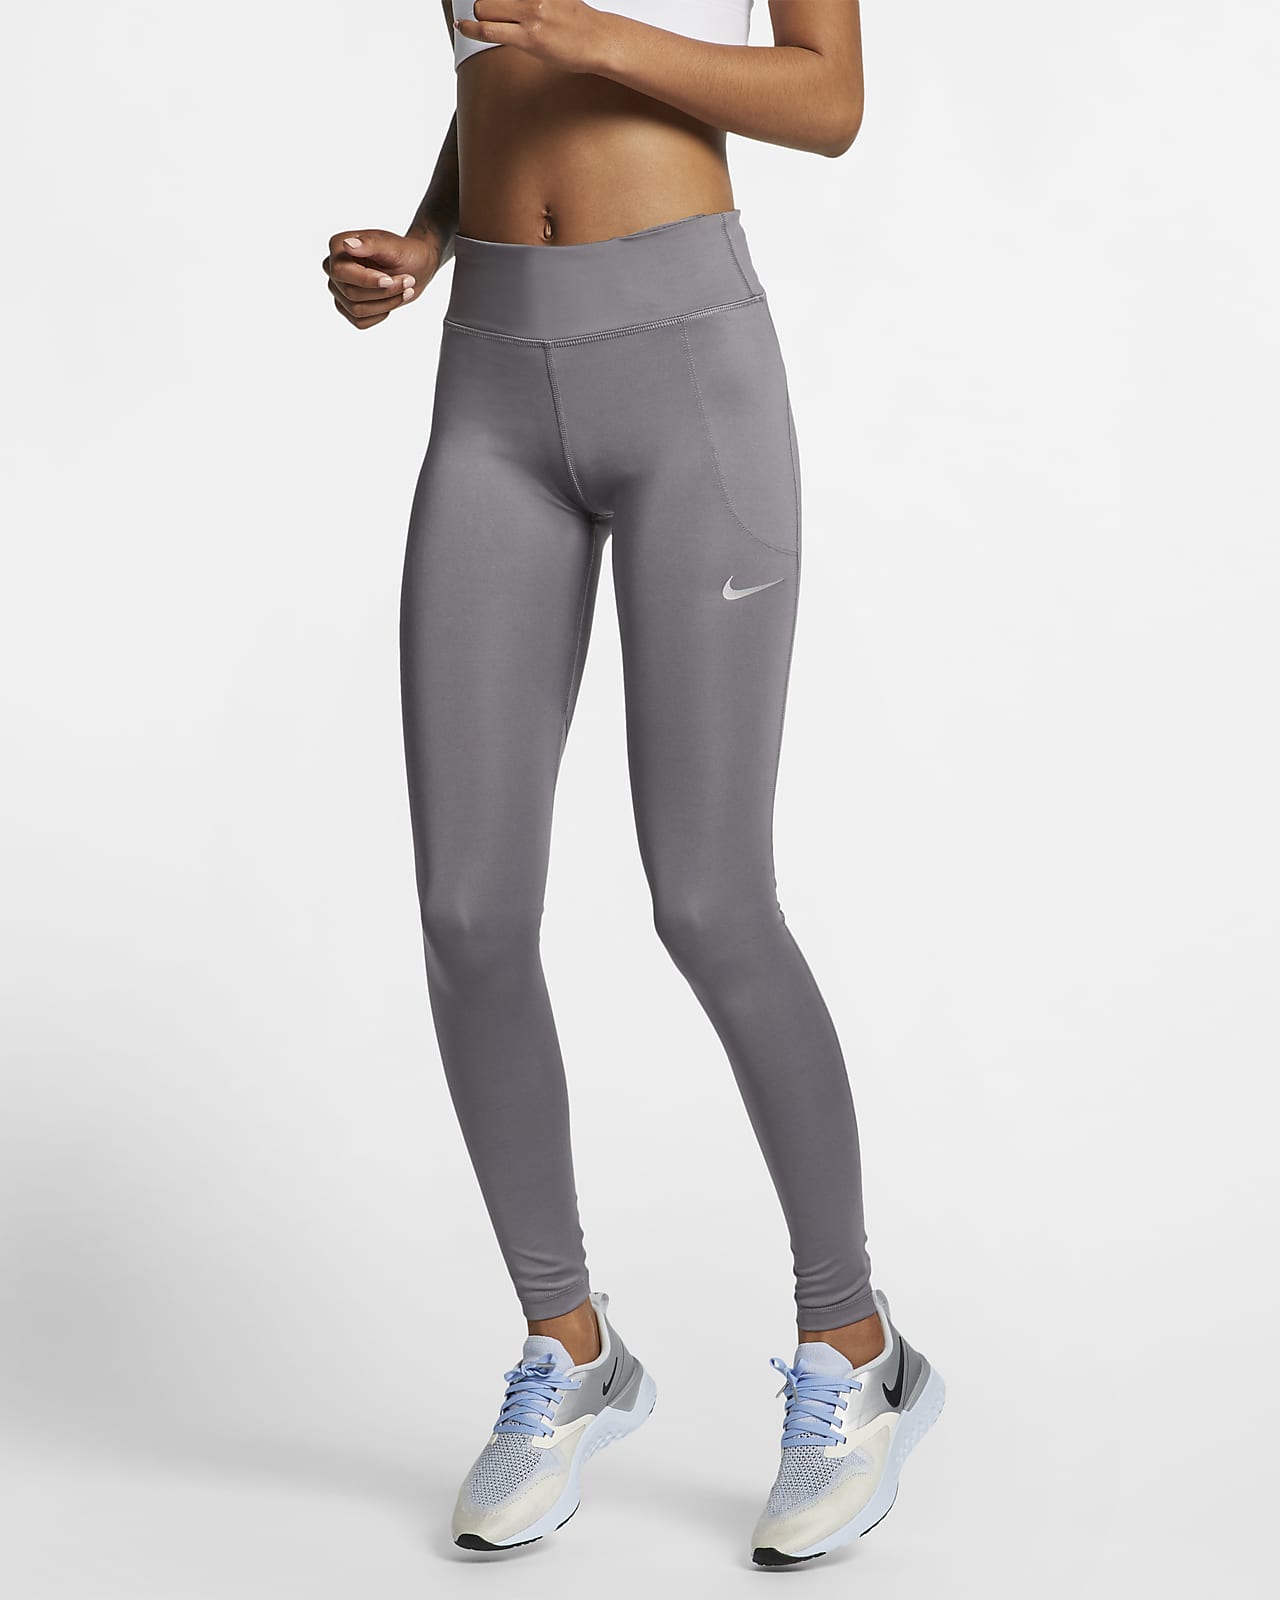 Nike Women's Mid-Rise Running